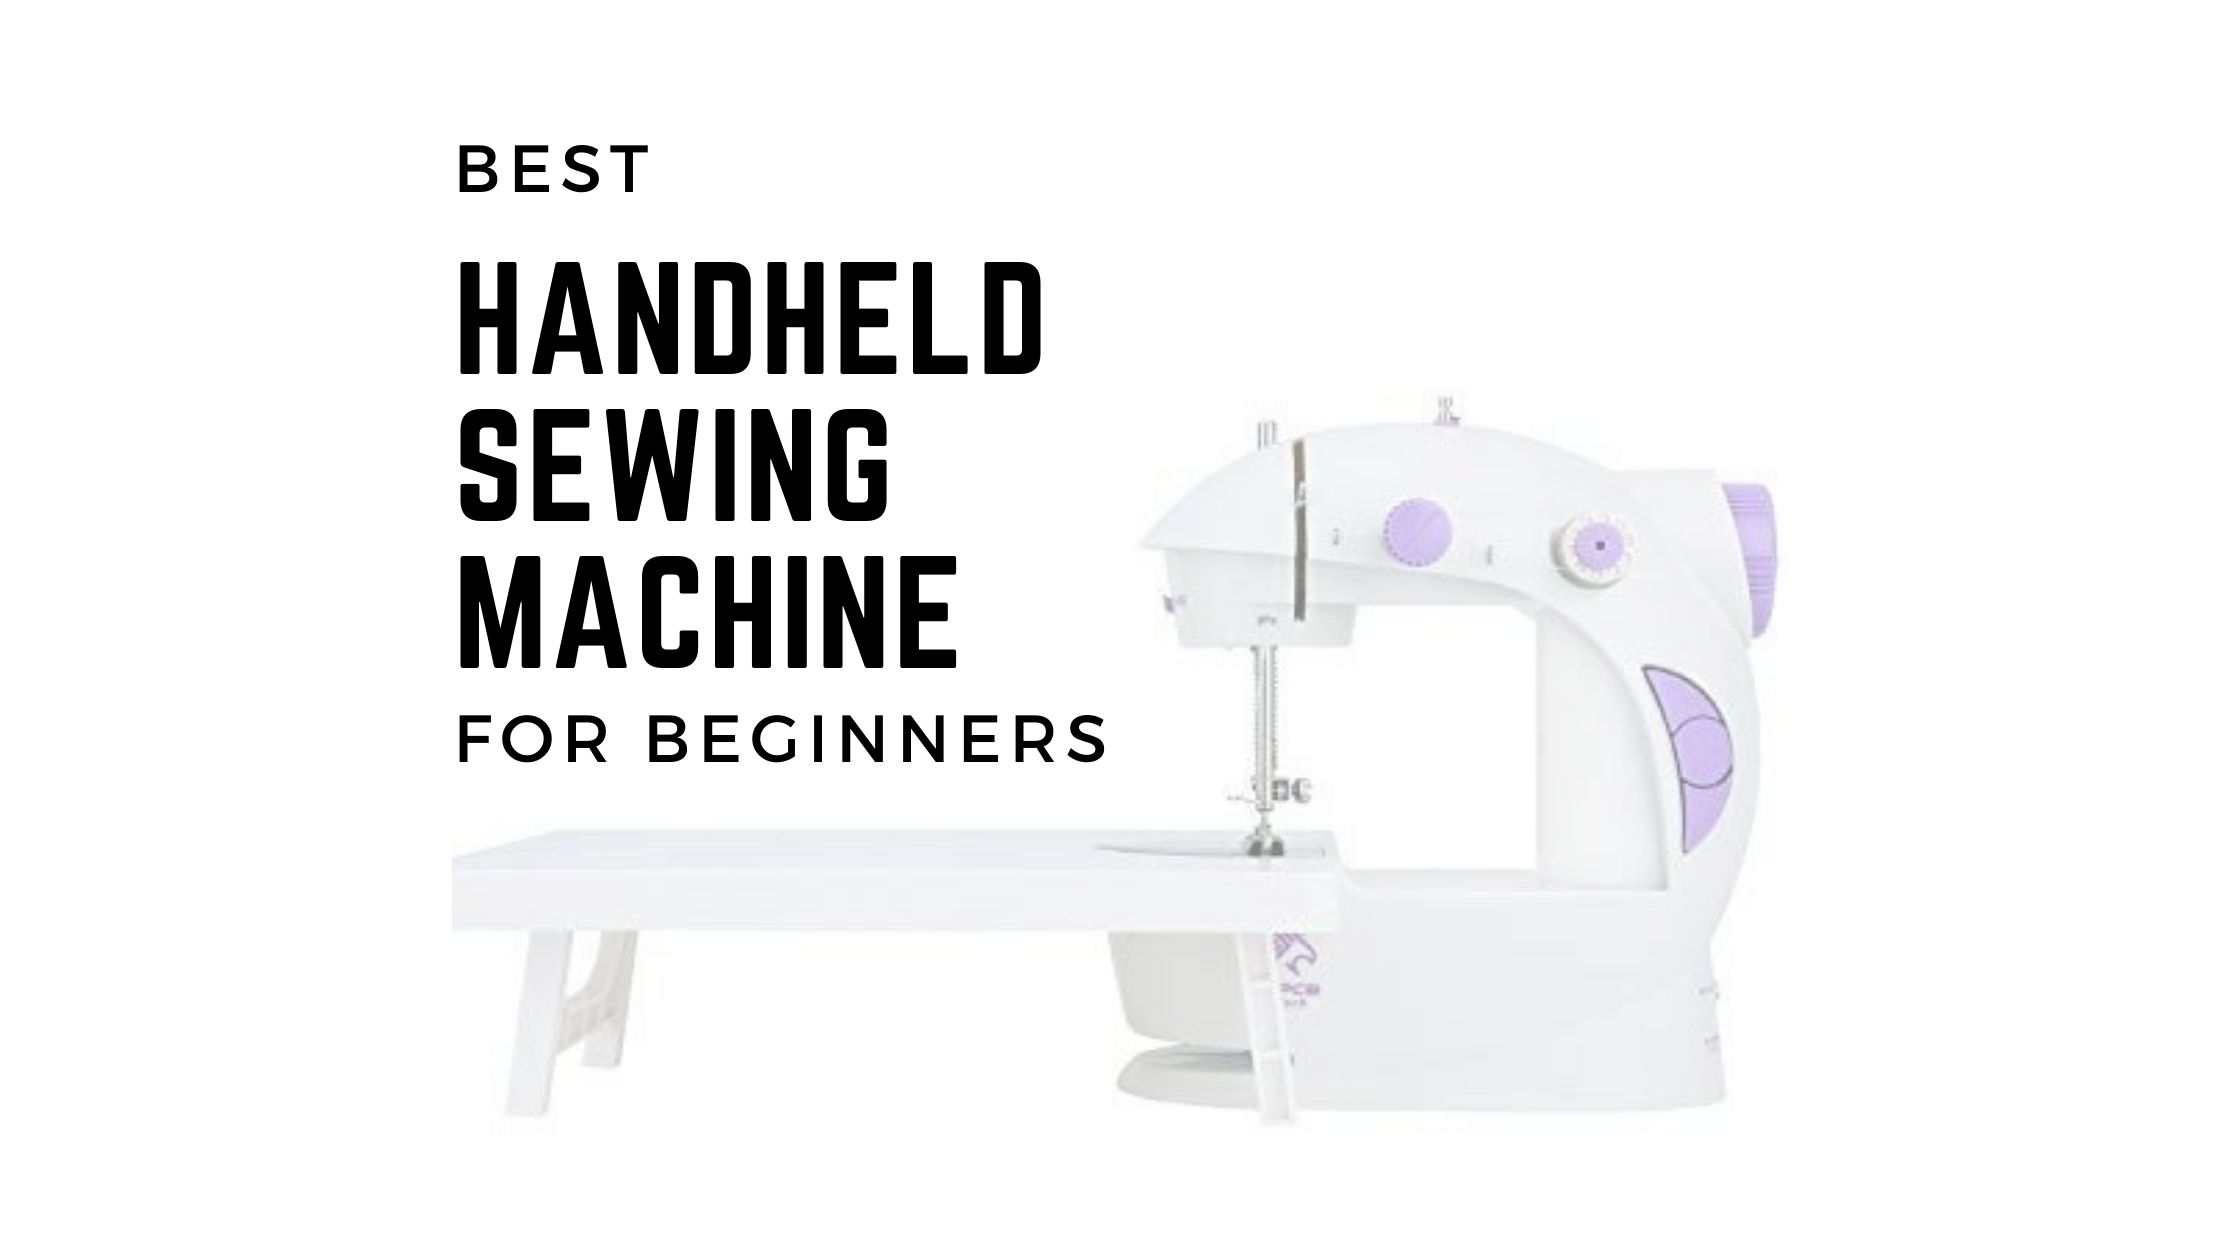 Best Handheld Sewing Machine for Beginners